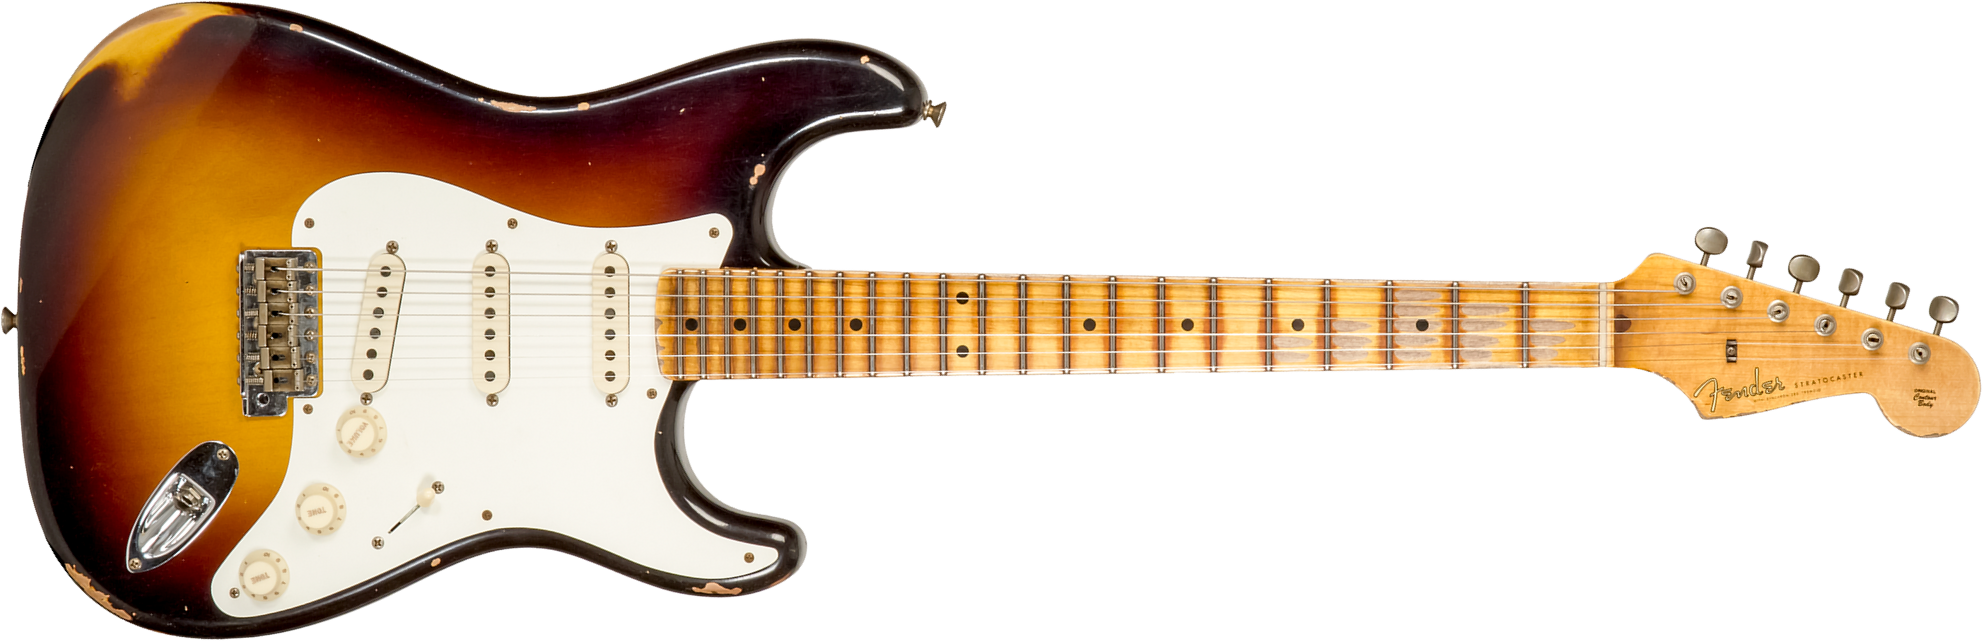 Fender Custom Shop Strat 1957 3s Trem Mn #cz575421 - Relic 2-color Sunburst - Elektrische gitaar in Str-vorm - Main picture